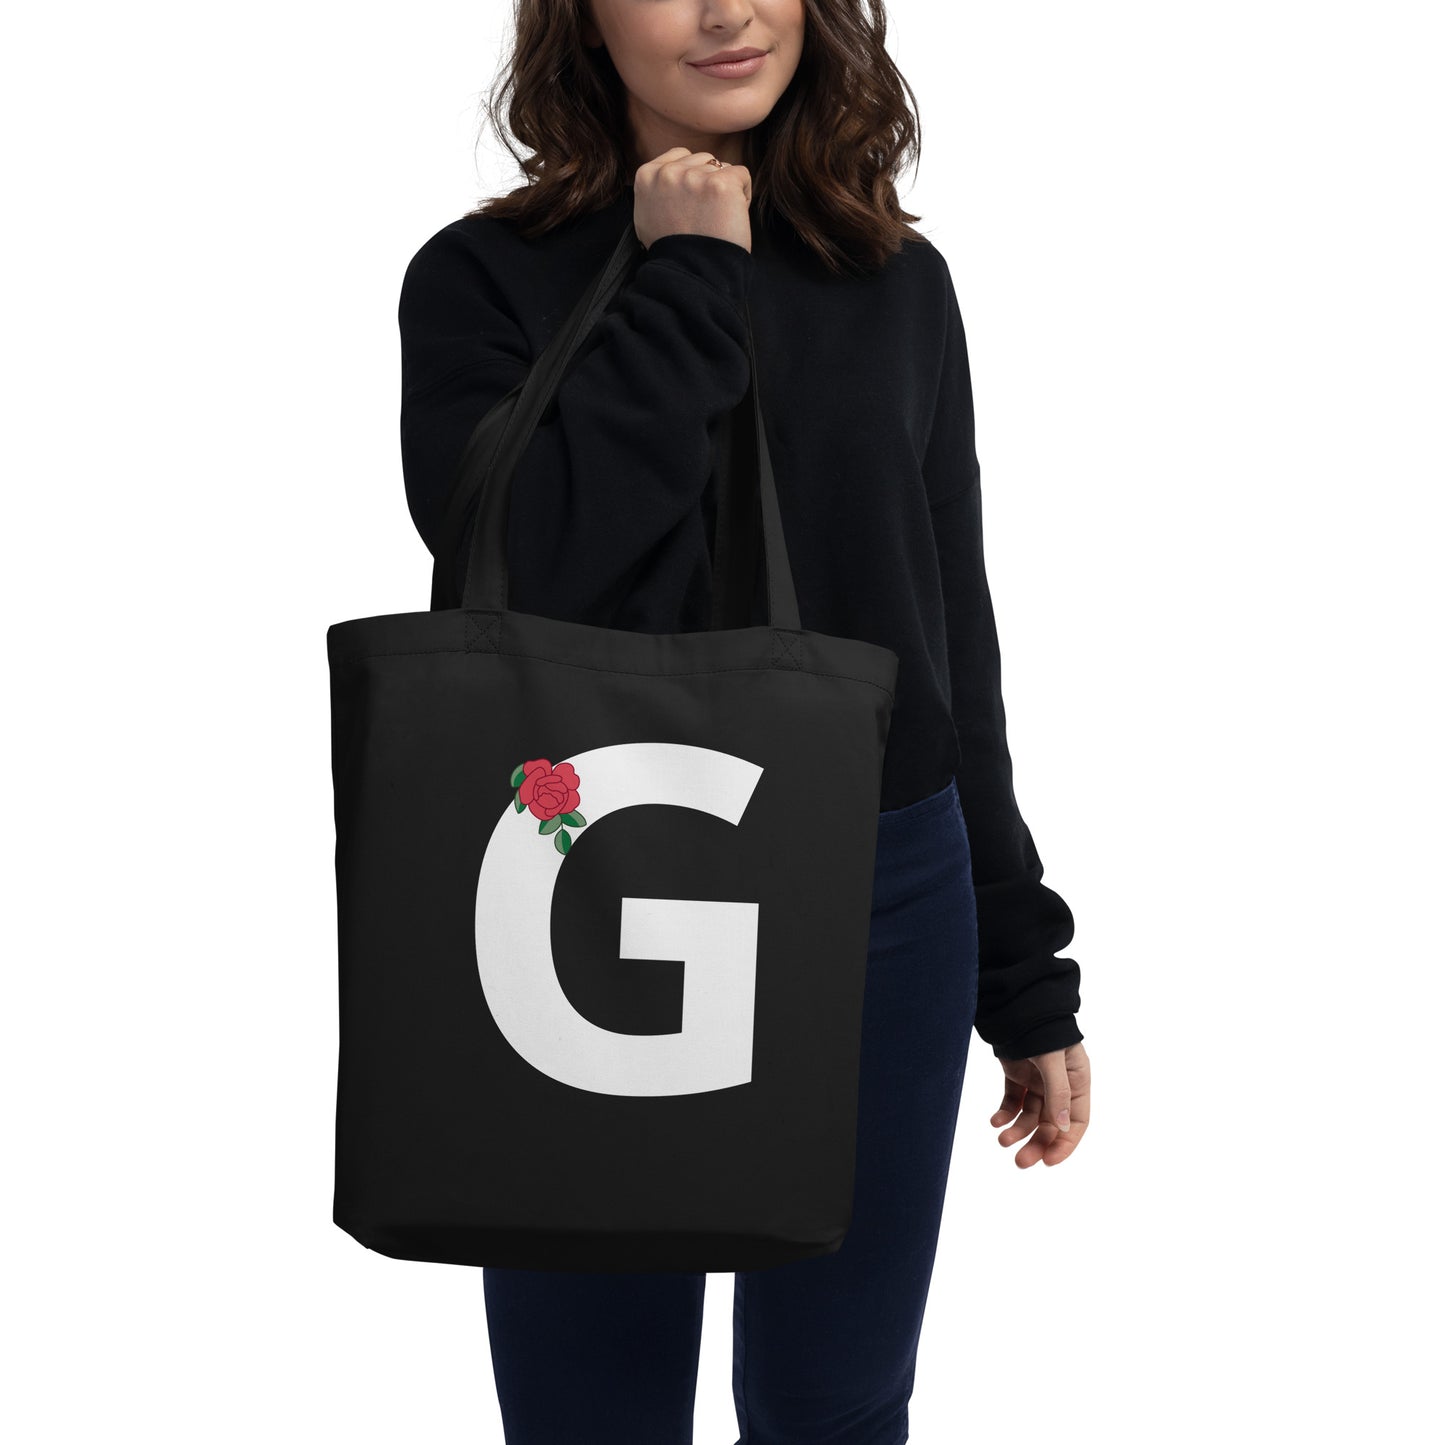 Letter "G" Eco Tote Bag